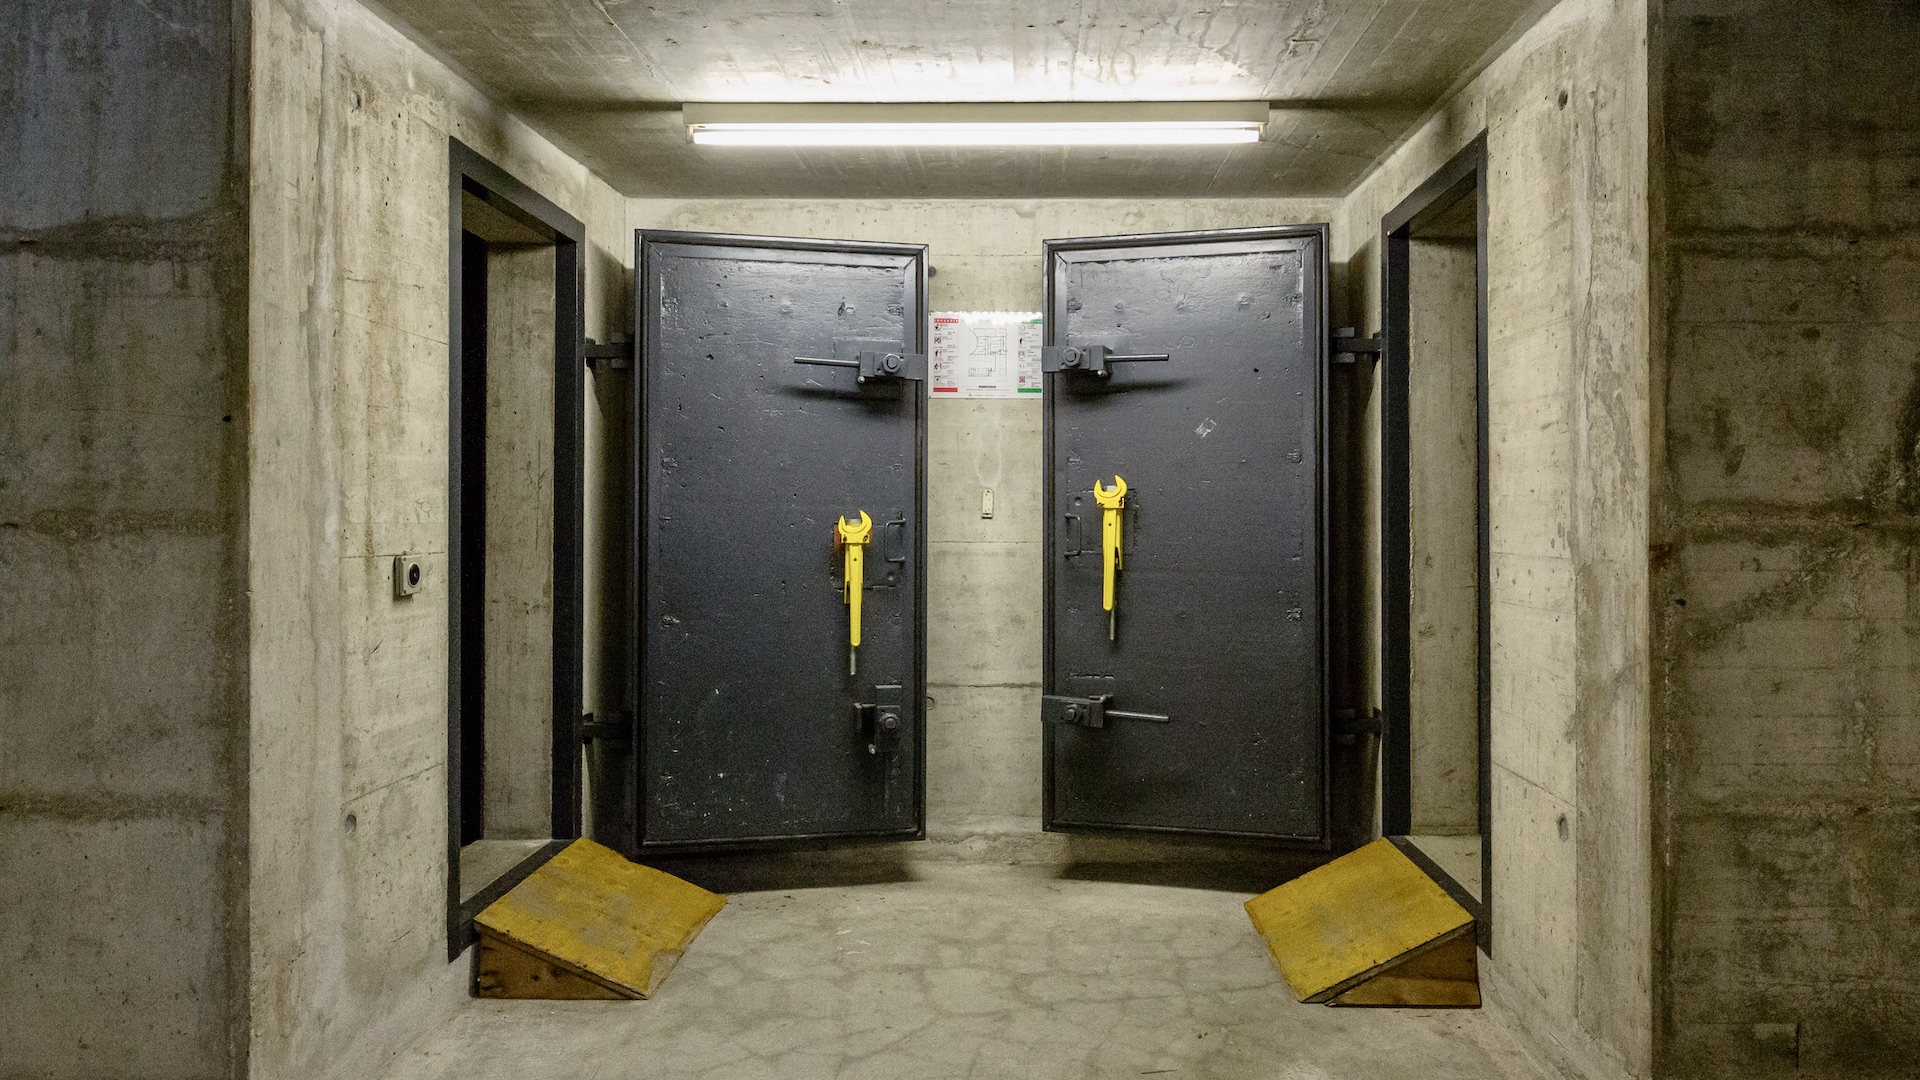 Flourescent light and two metal doors - concrete bunker style. Lausanne Switzerland